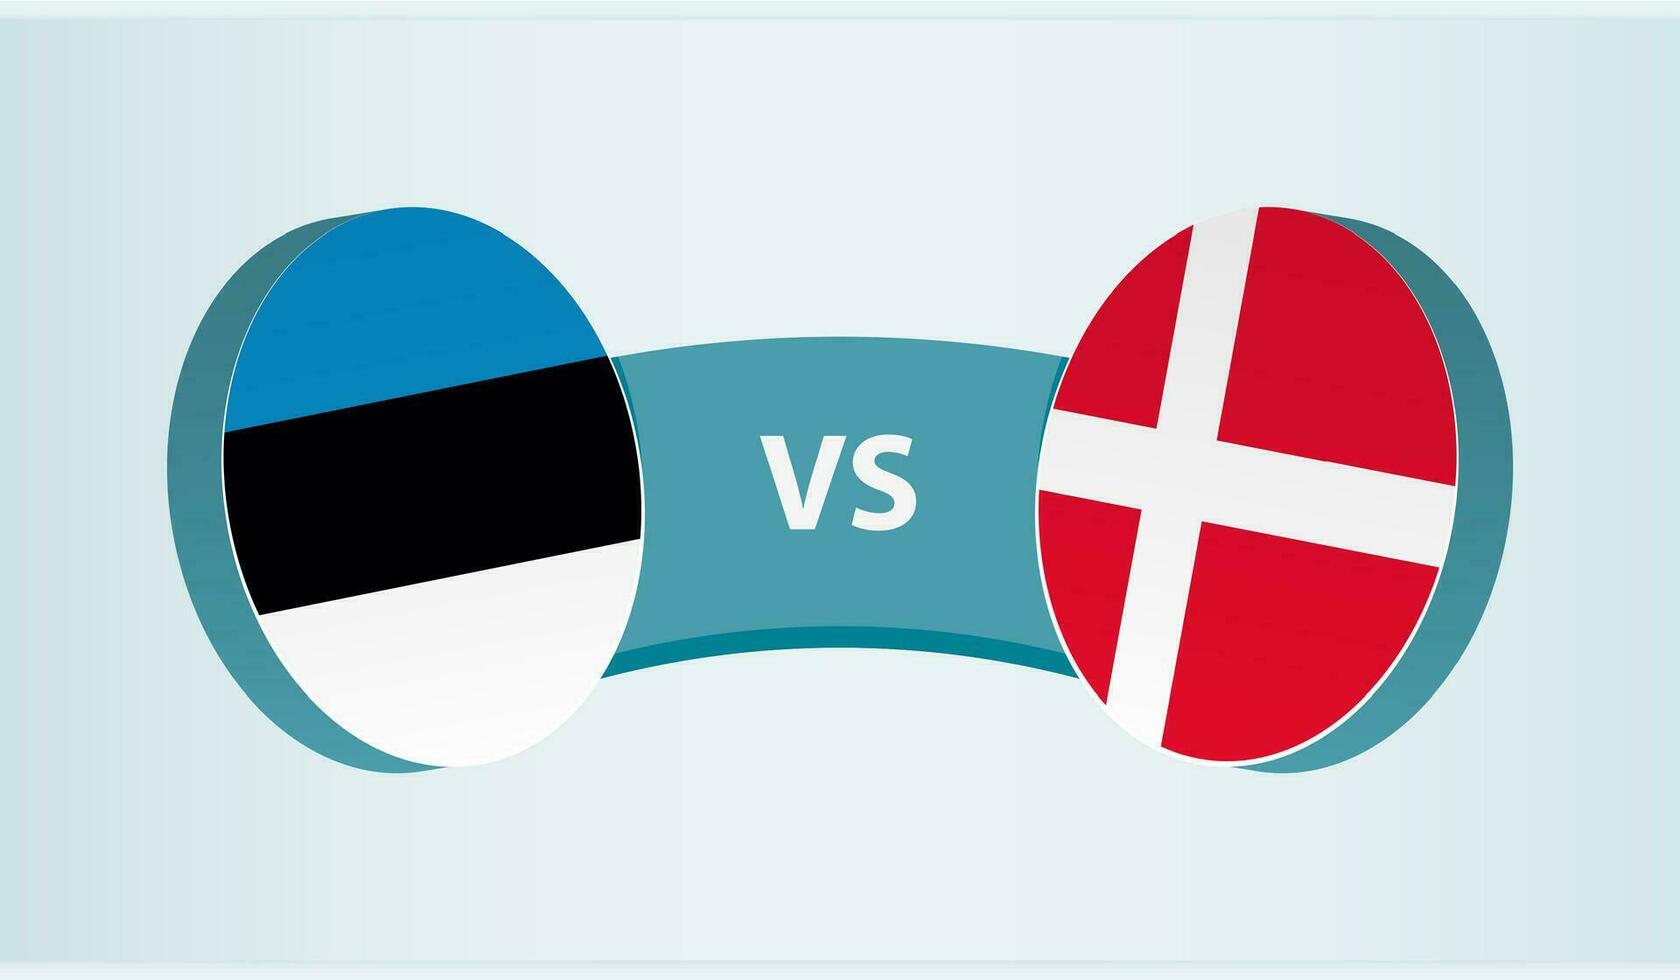 Estonia versus Denmark, team sports competition concept. vector